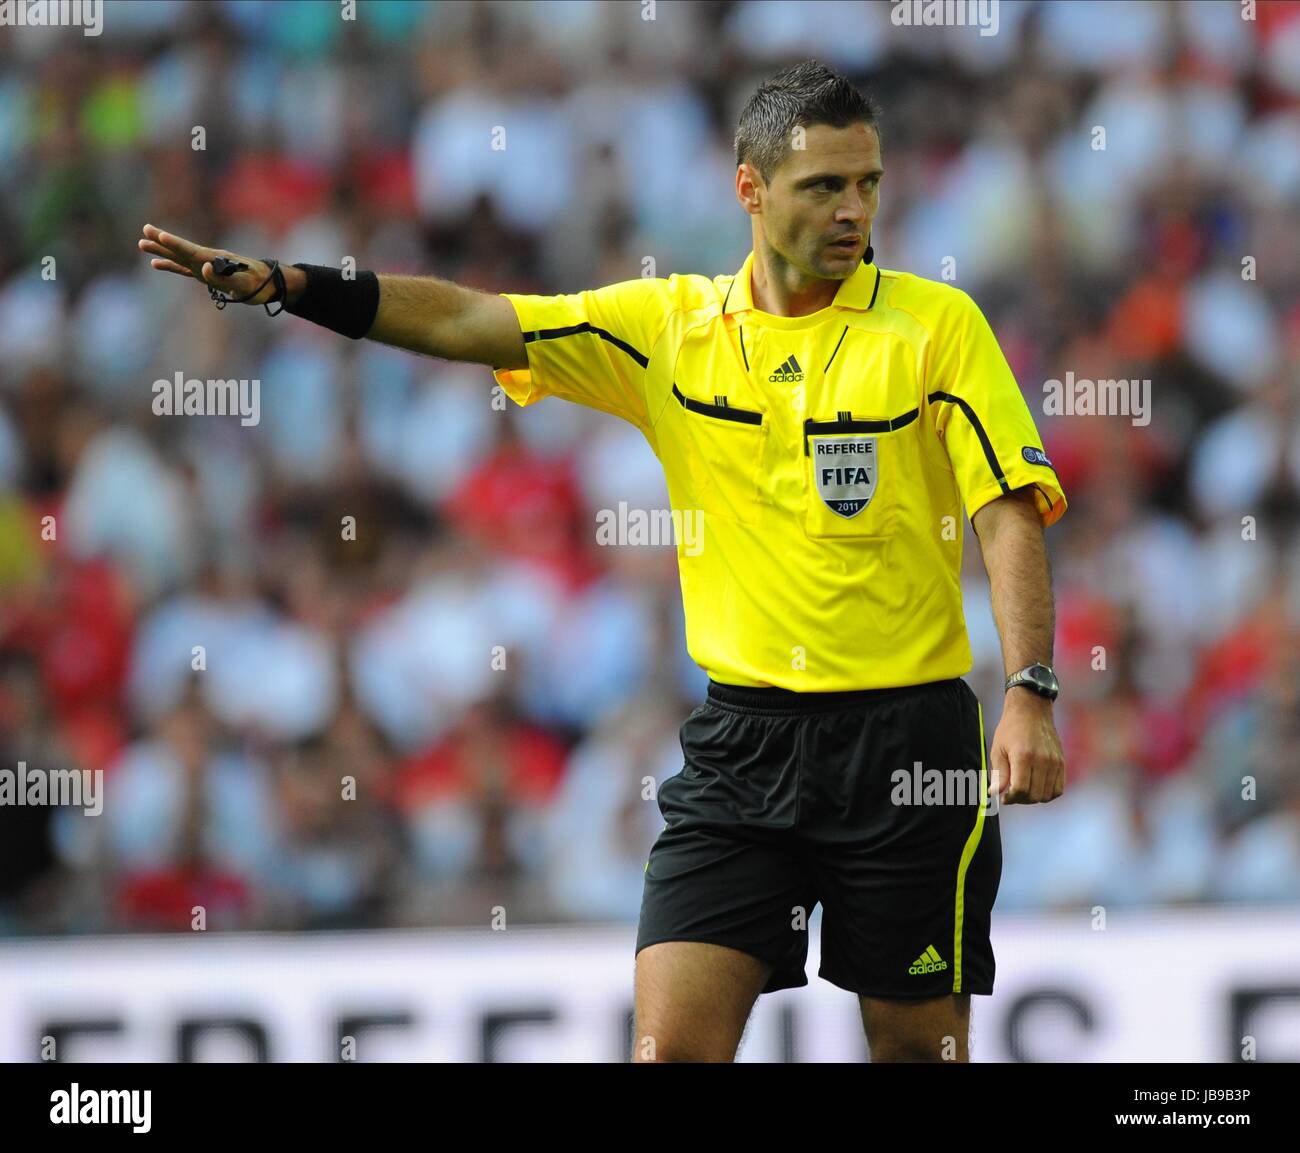 Damir skomina referee hi-res stock photography and images - Alamy